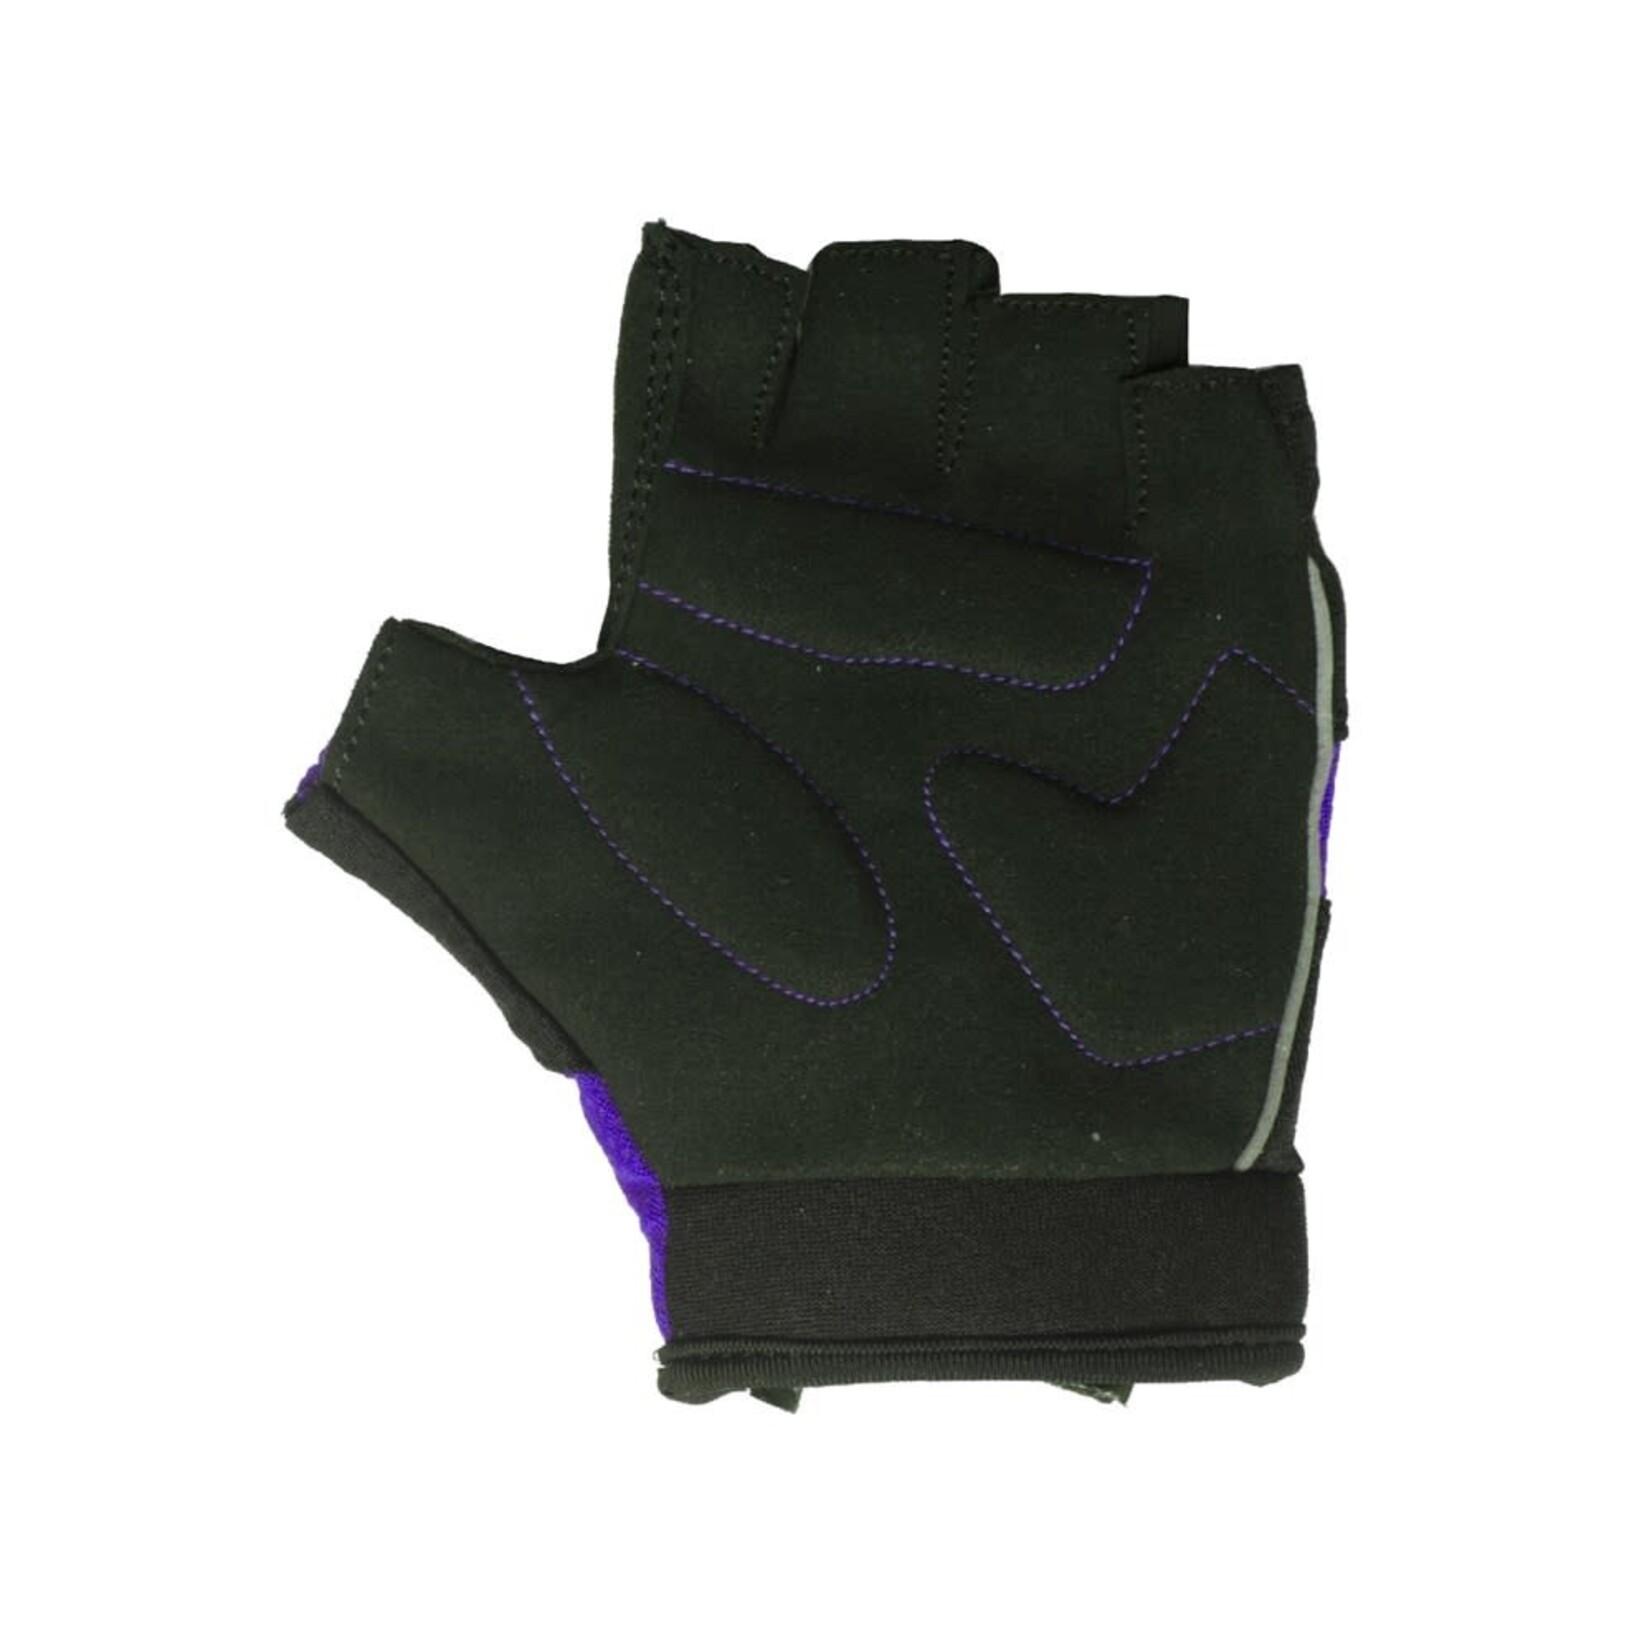 Azur Kids K6 Series Glove Purple